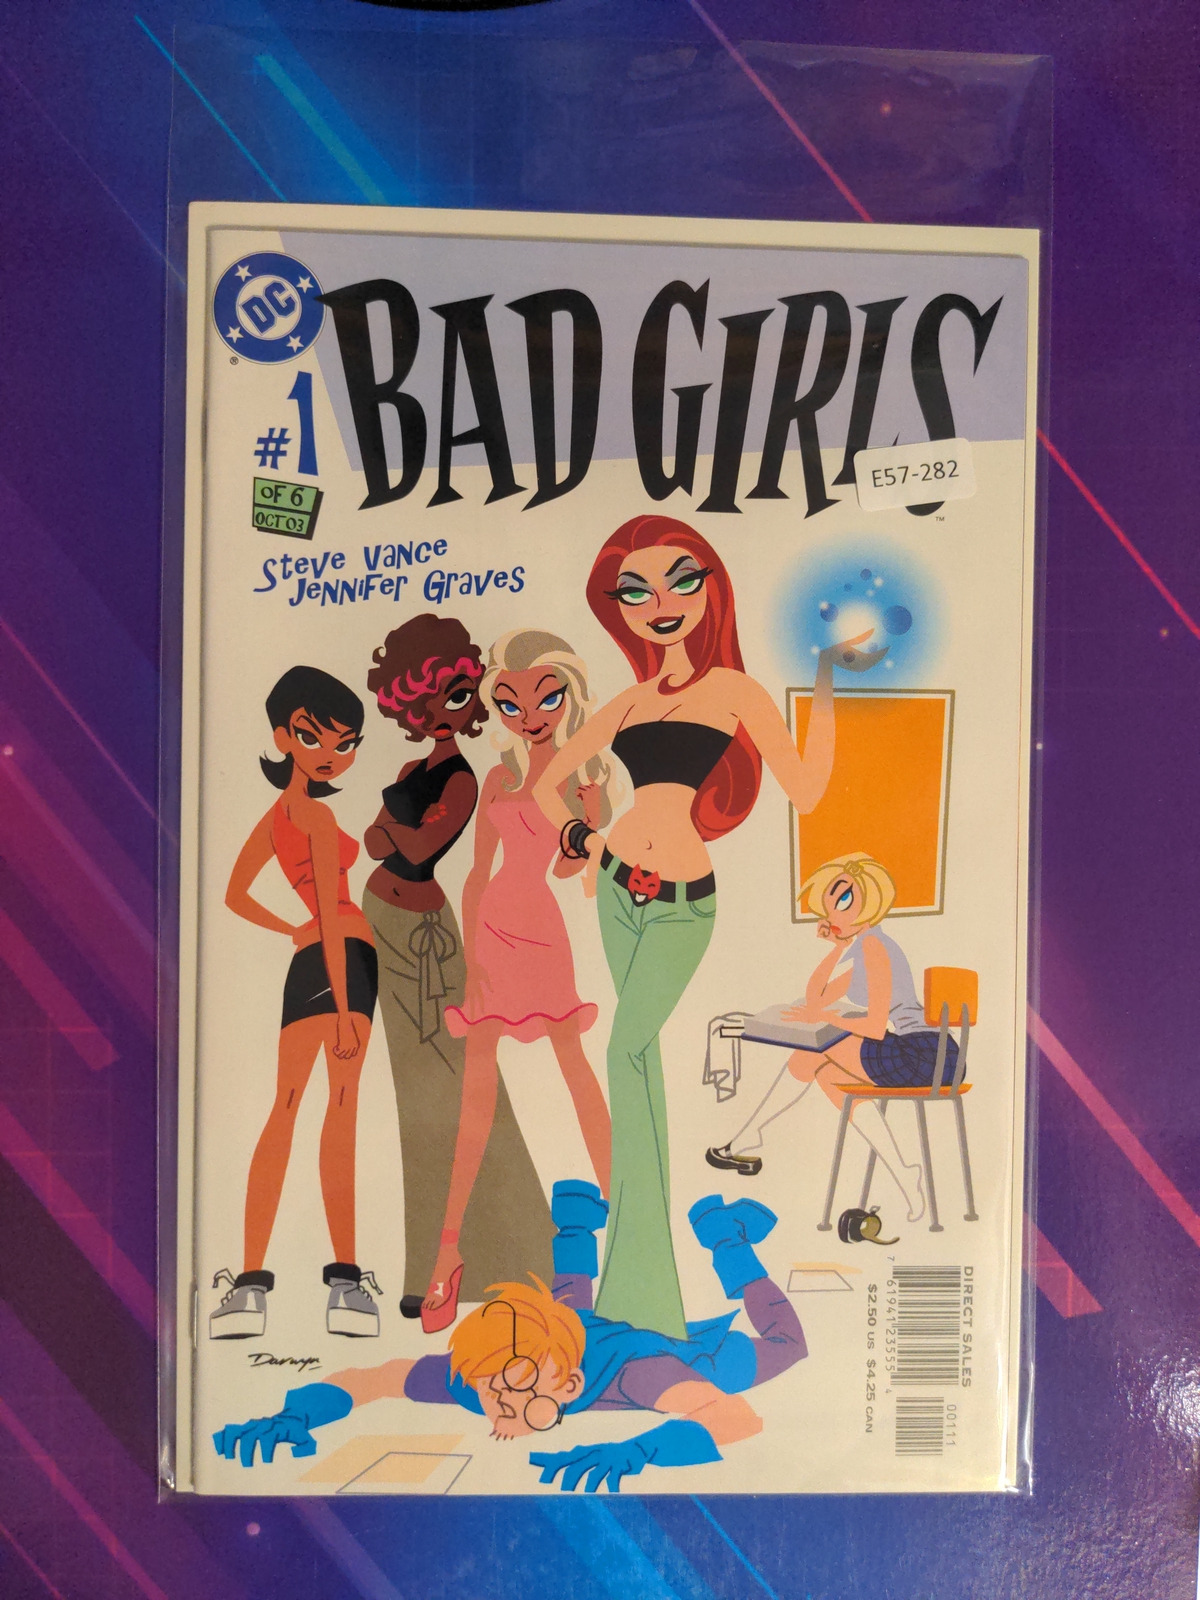 BAD GIRLS #1 9.0 DC COMIC BOOK E57-282